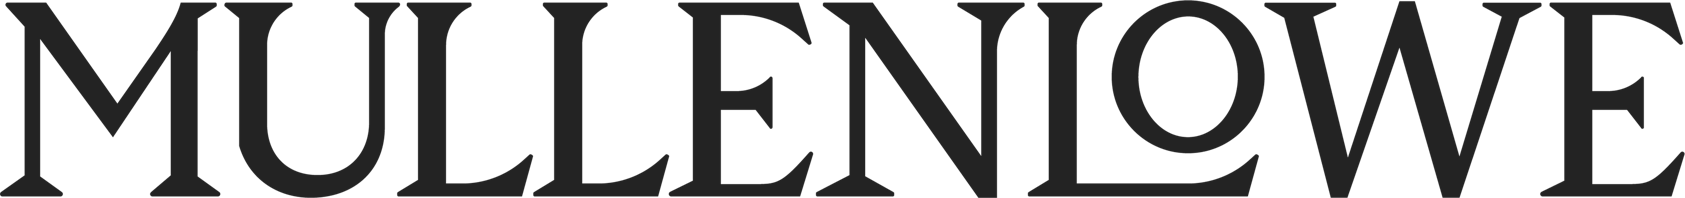 MullenLowe U.S. logo